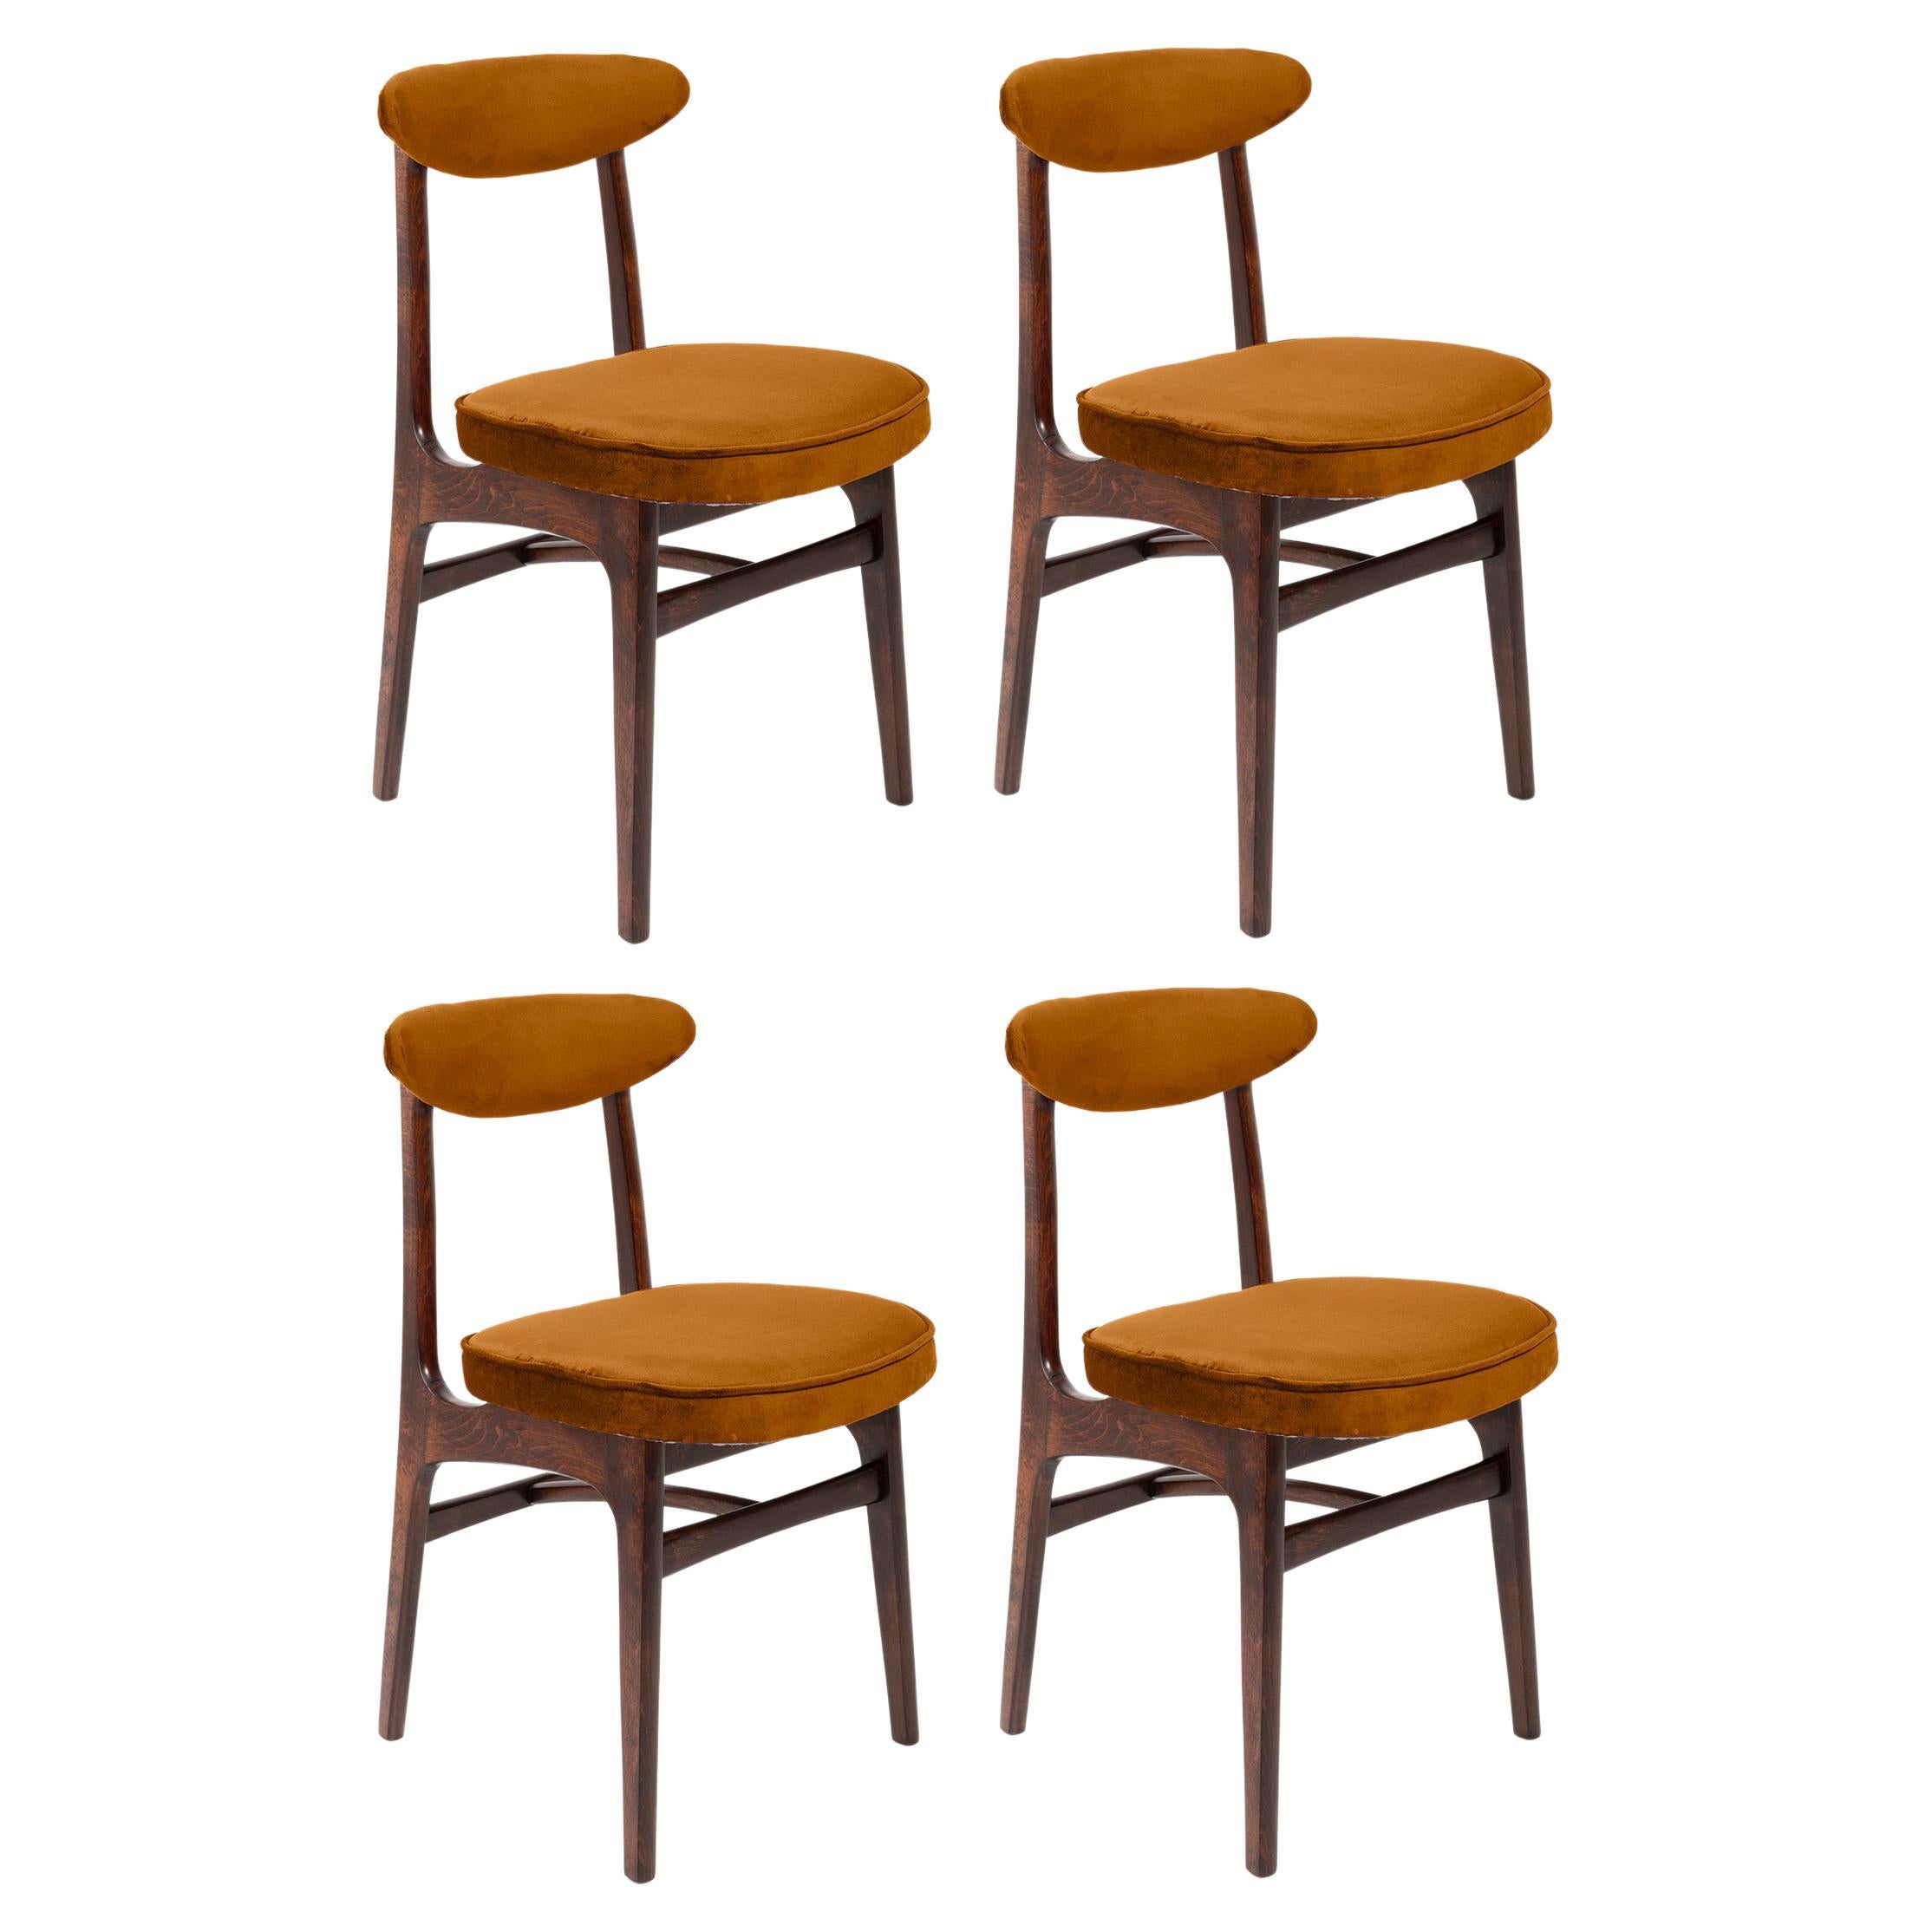 Four 20th Century Copper Velvet Chairs Designed by Rajmund Halas, Europe, 1960s